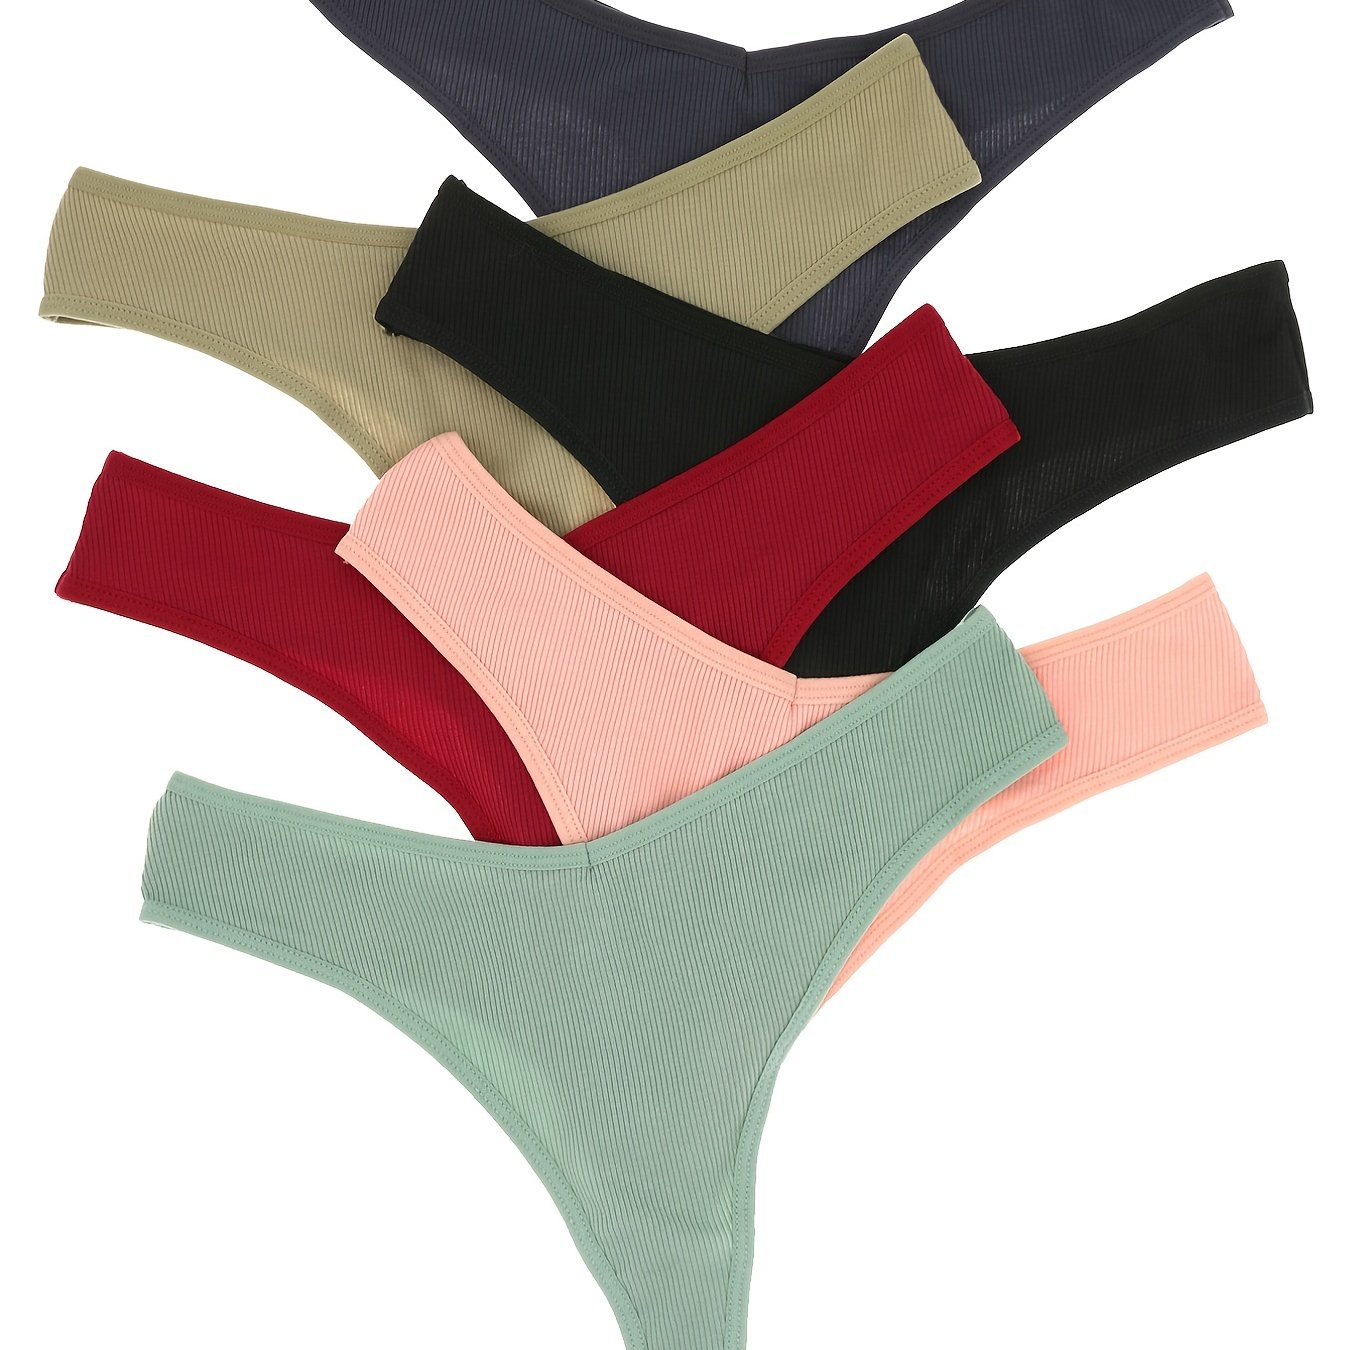 ZXYOUPING Tangas de algodón con Cintura baja para mujer/Tanga suave/cómoda  con color sólido y moño M-GG